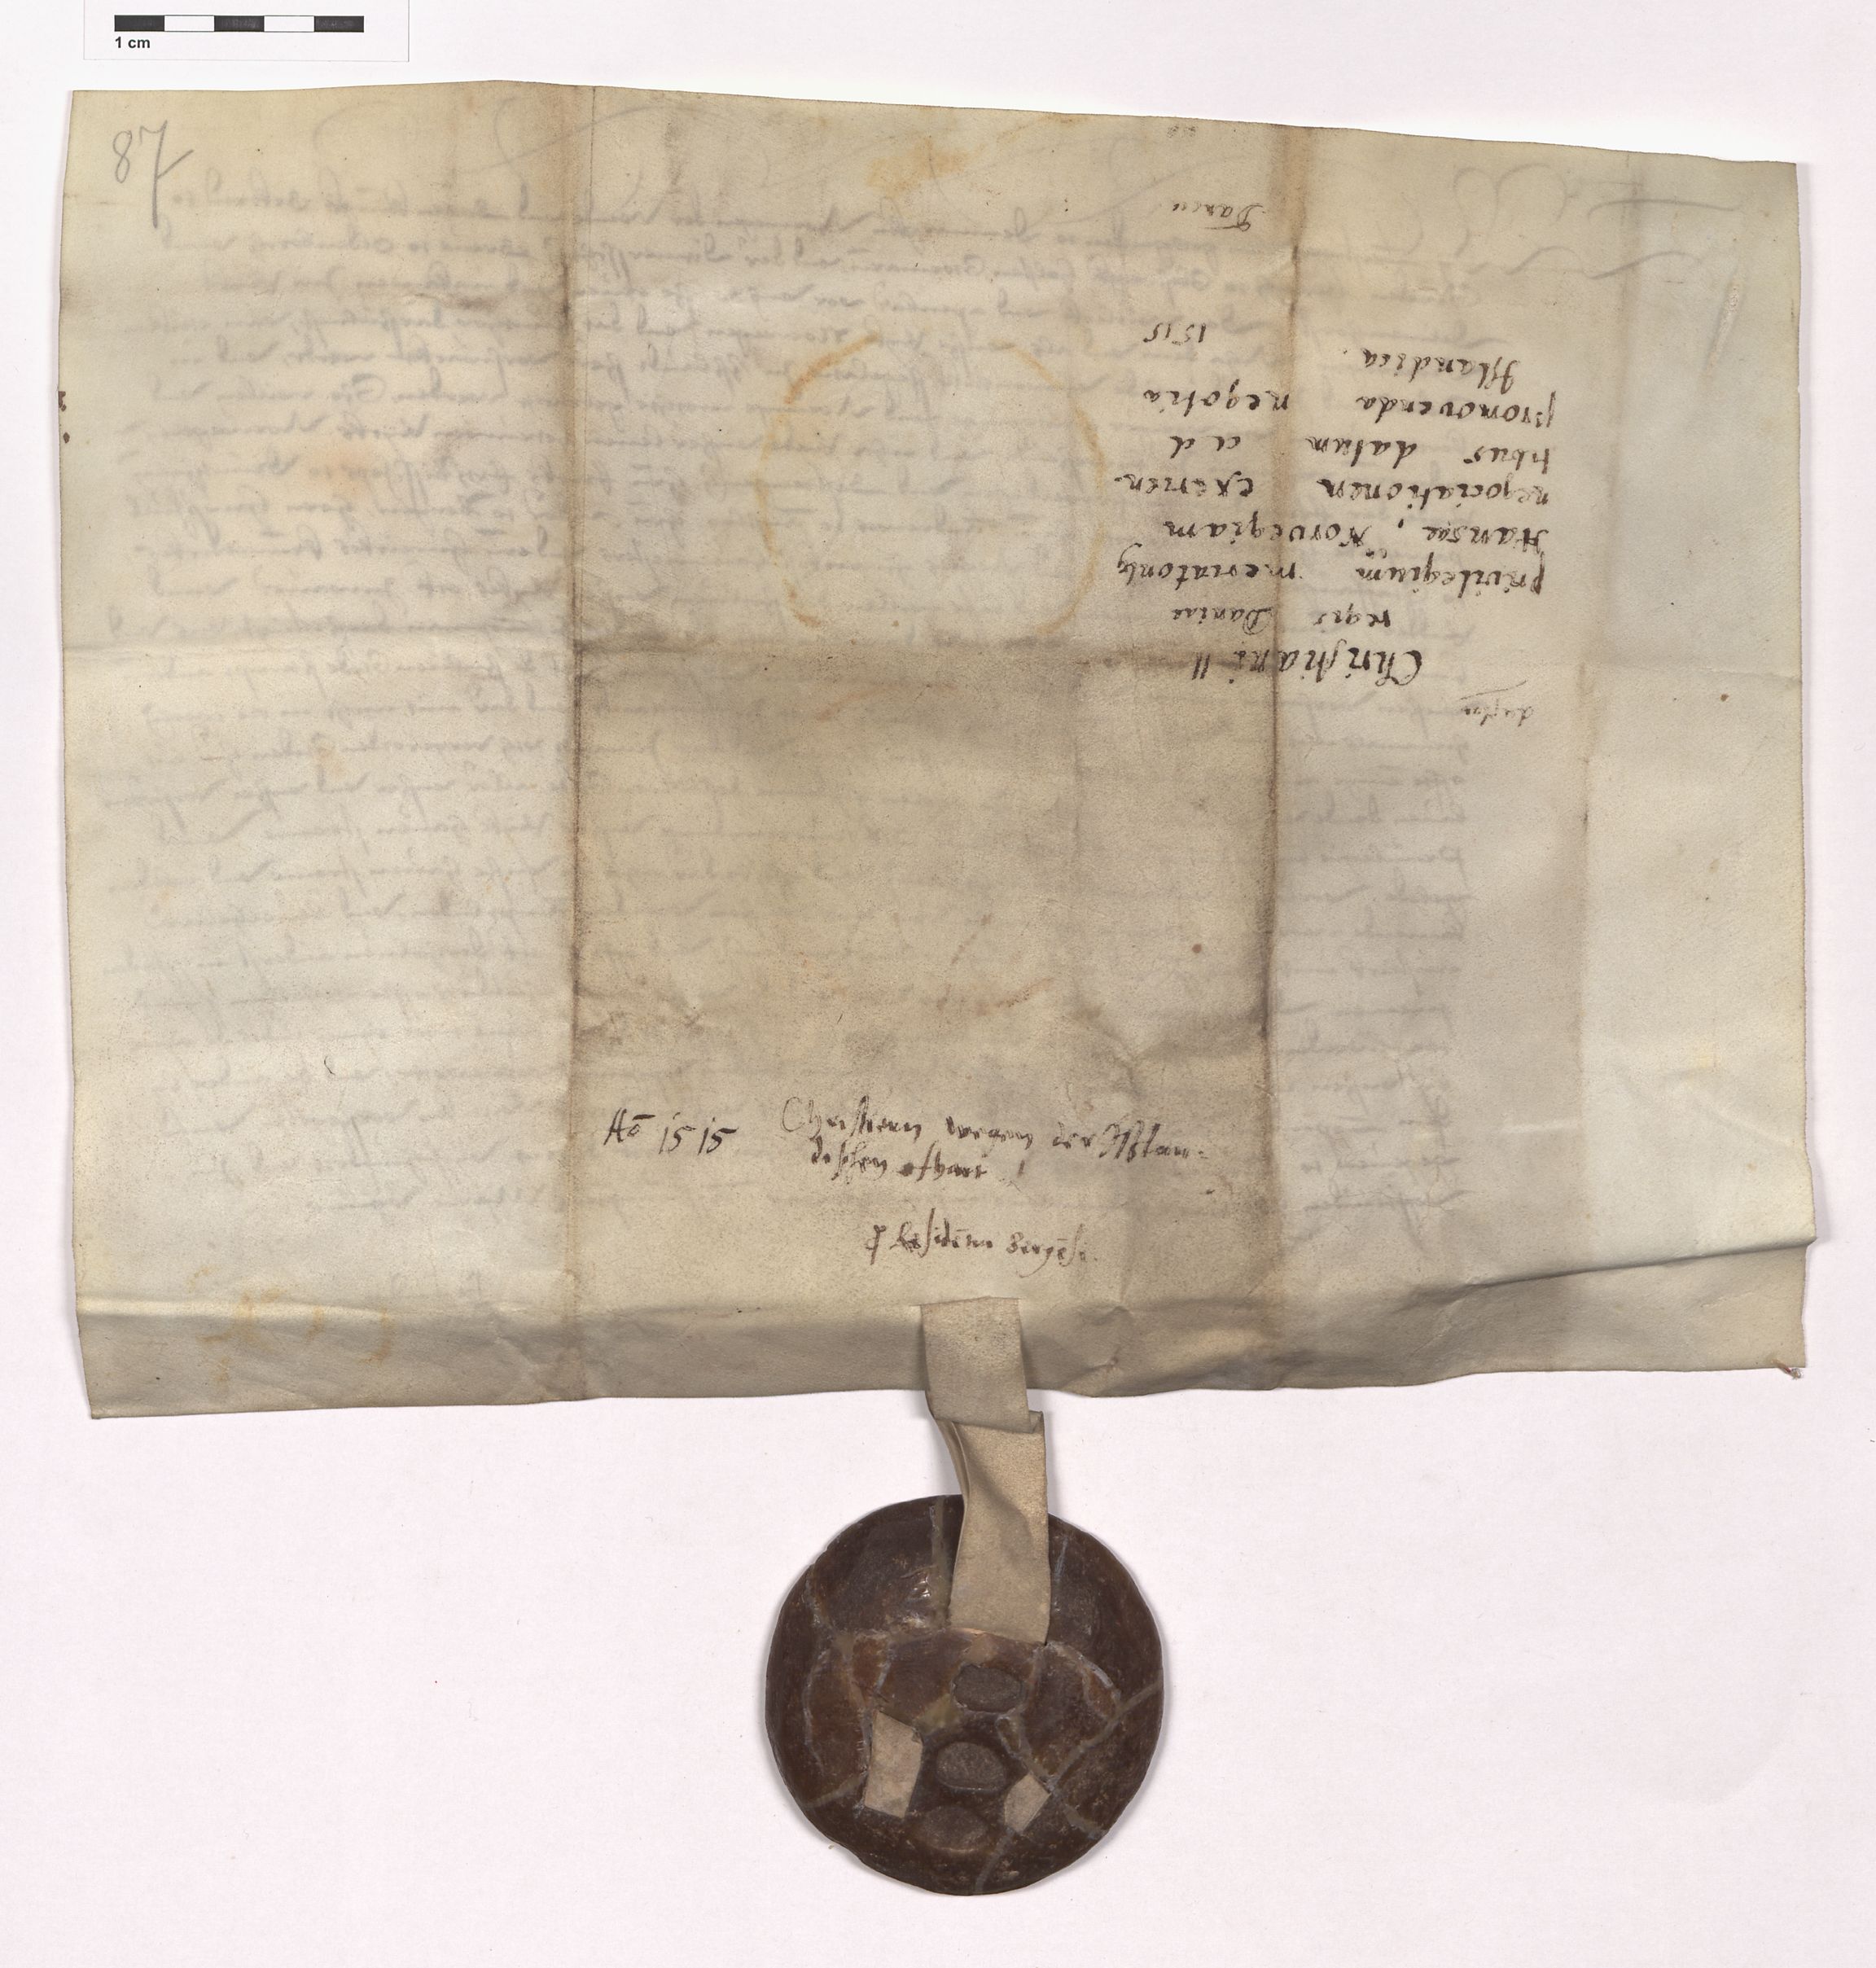 07.1 Urkunden, 3 Auswärtige Beziehungen (Externa), AHL/-/21: Norwegen (Norvagica); Kontor zu Bergen, 1247-1747, s. 885